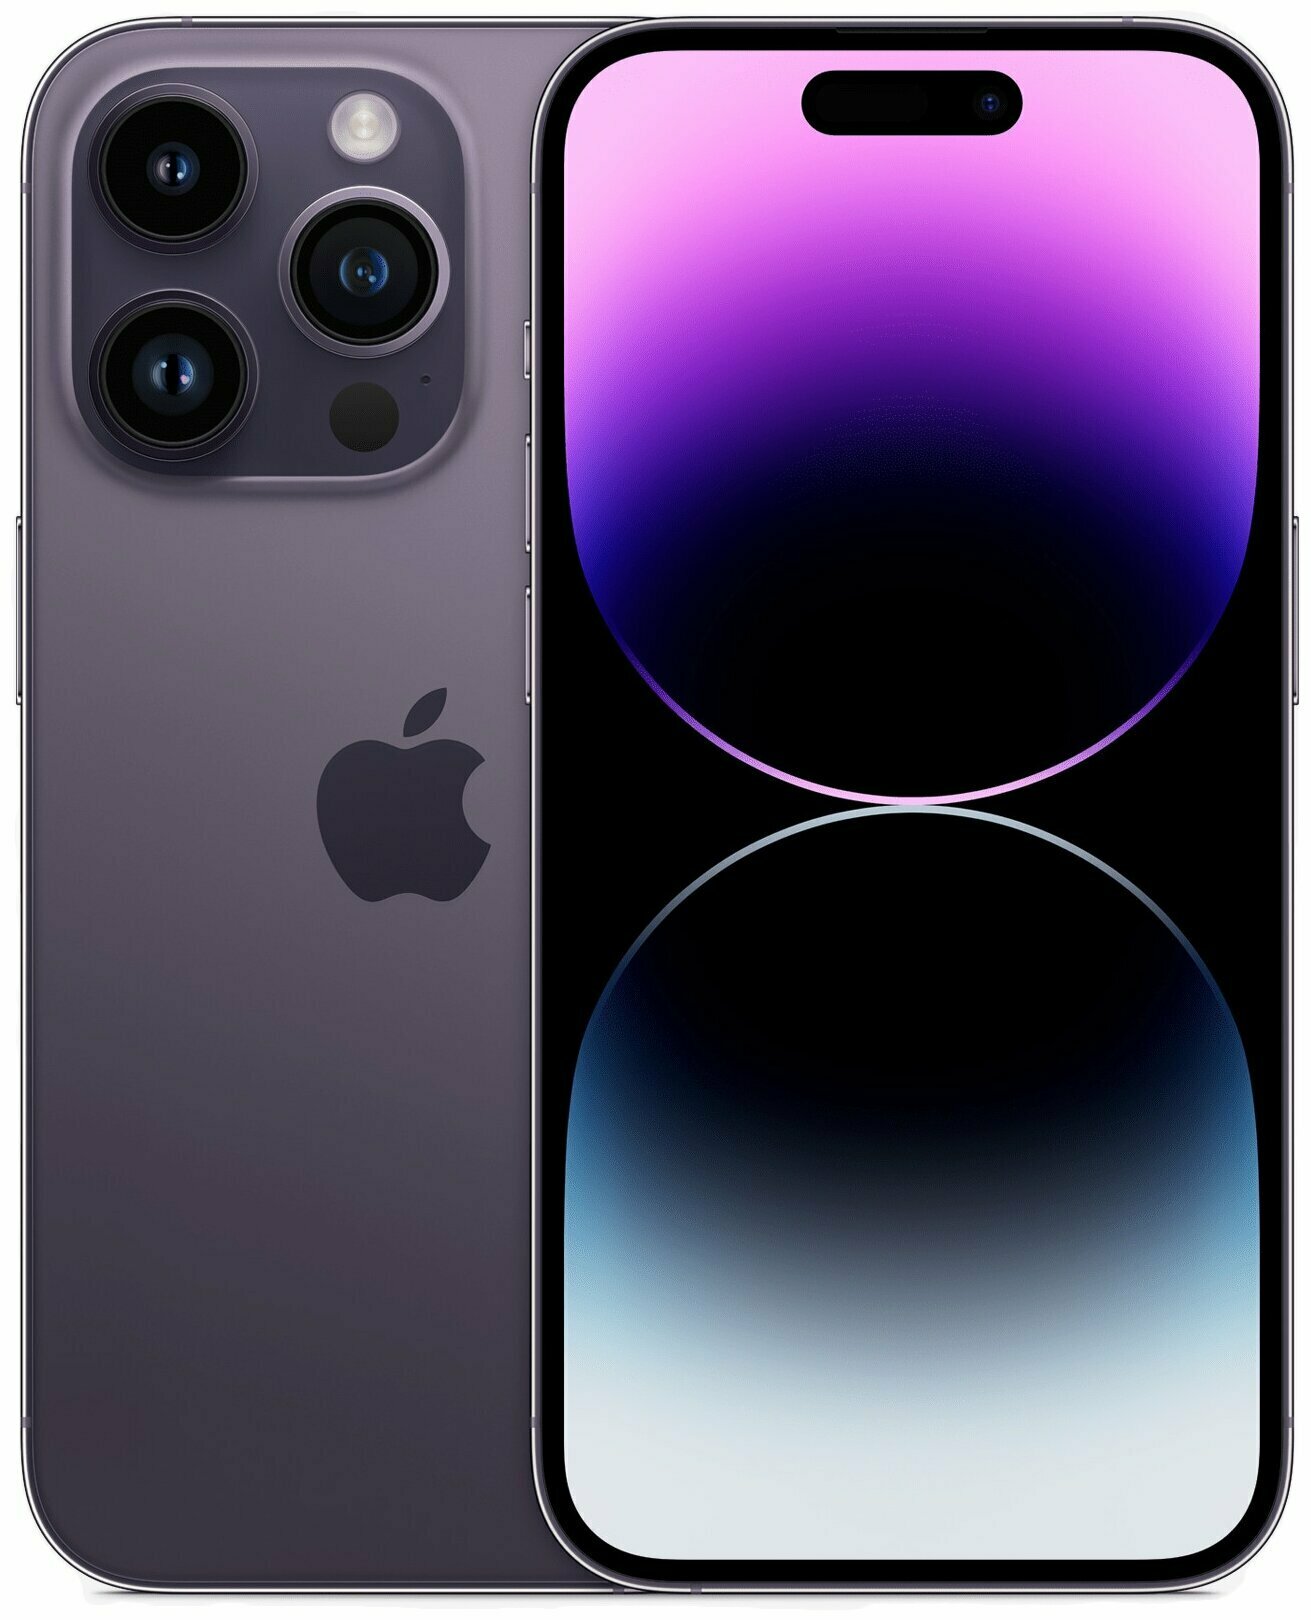 Apple iPhone 14 Pro, 1 ТБ темно-фиолетовый